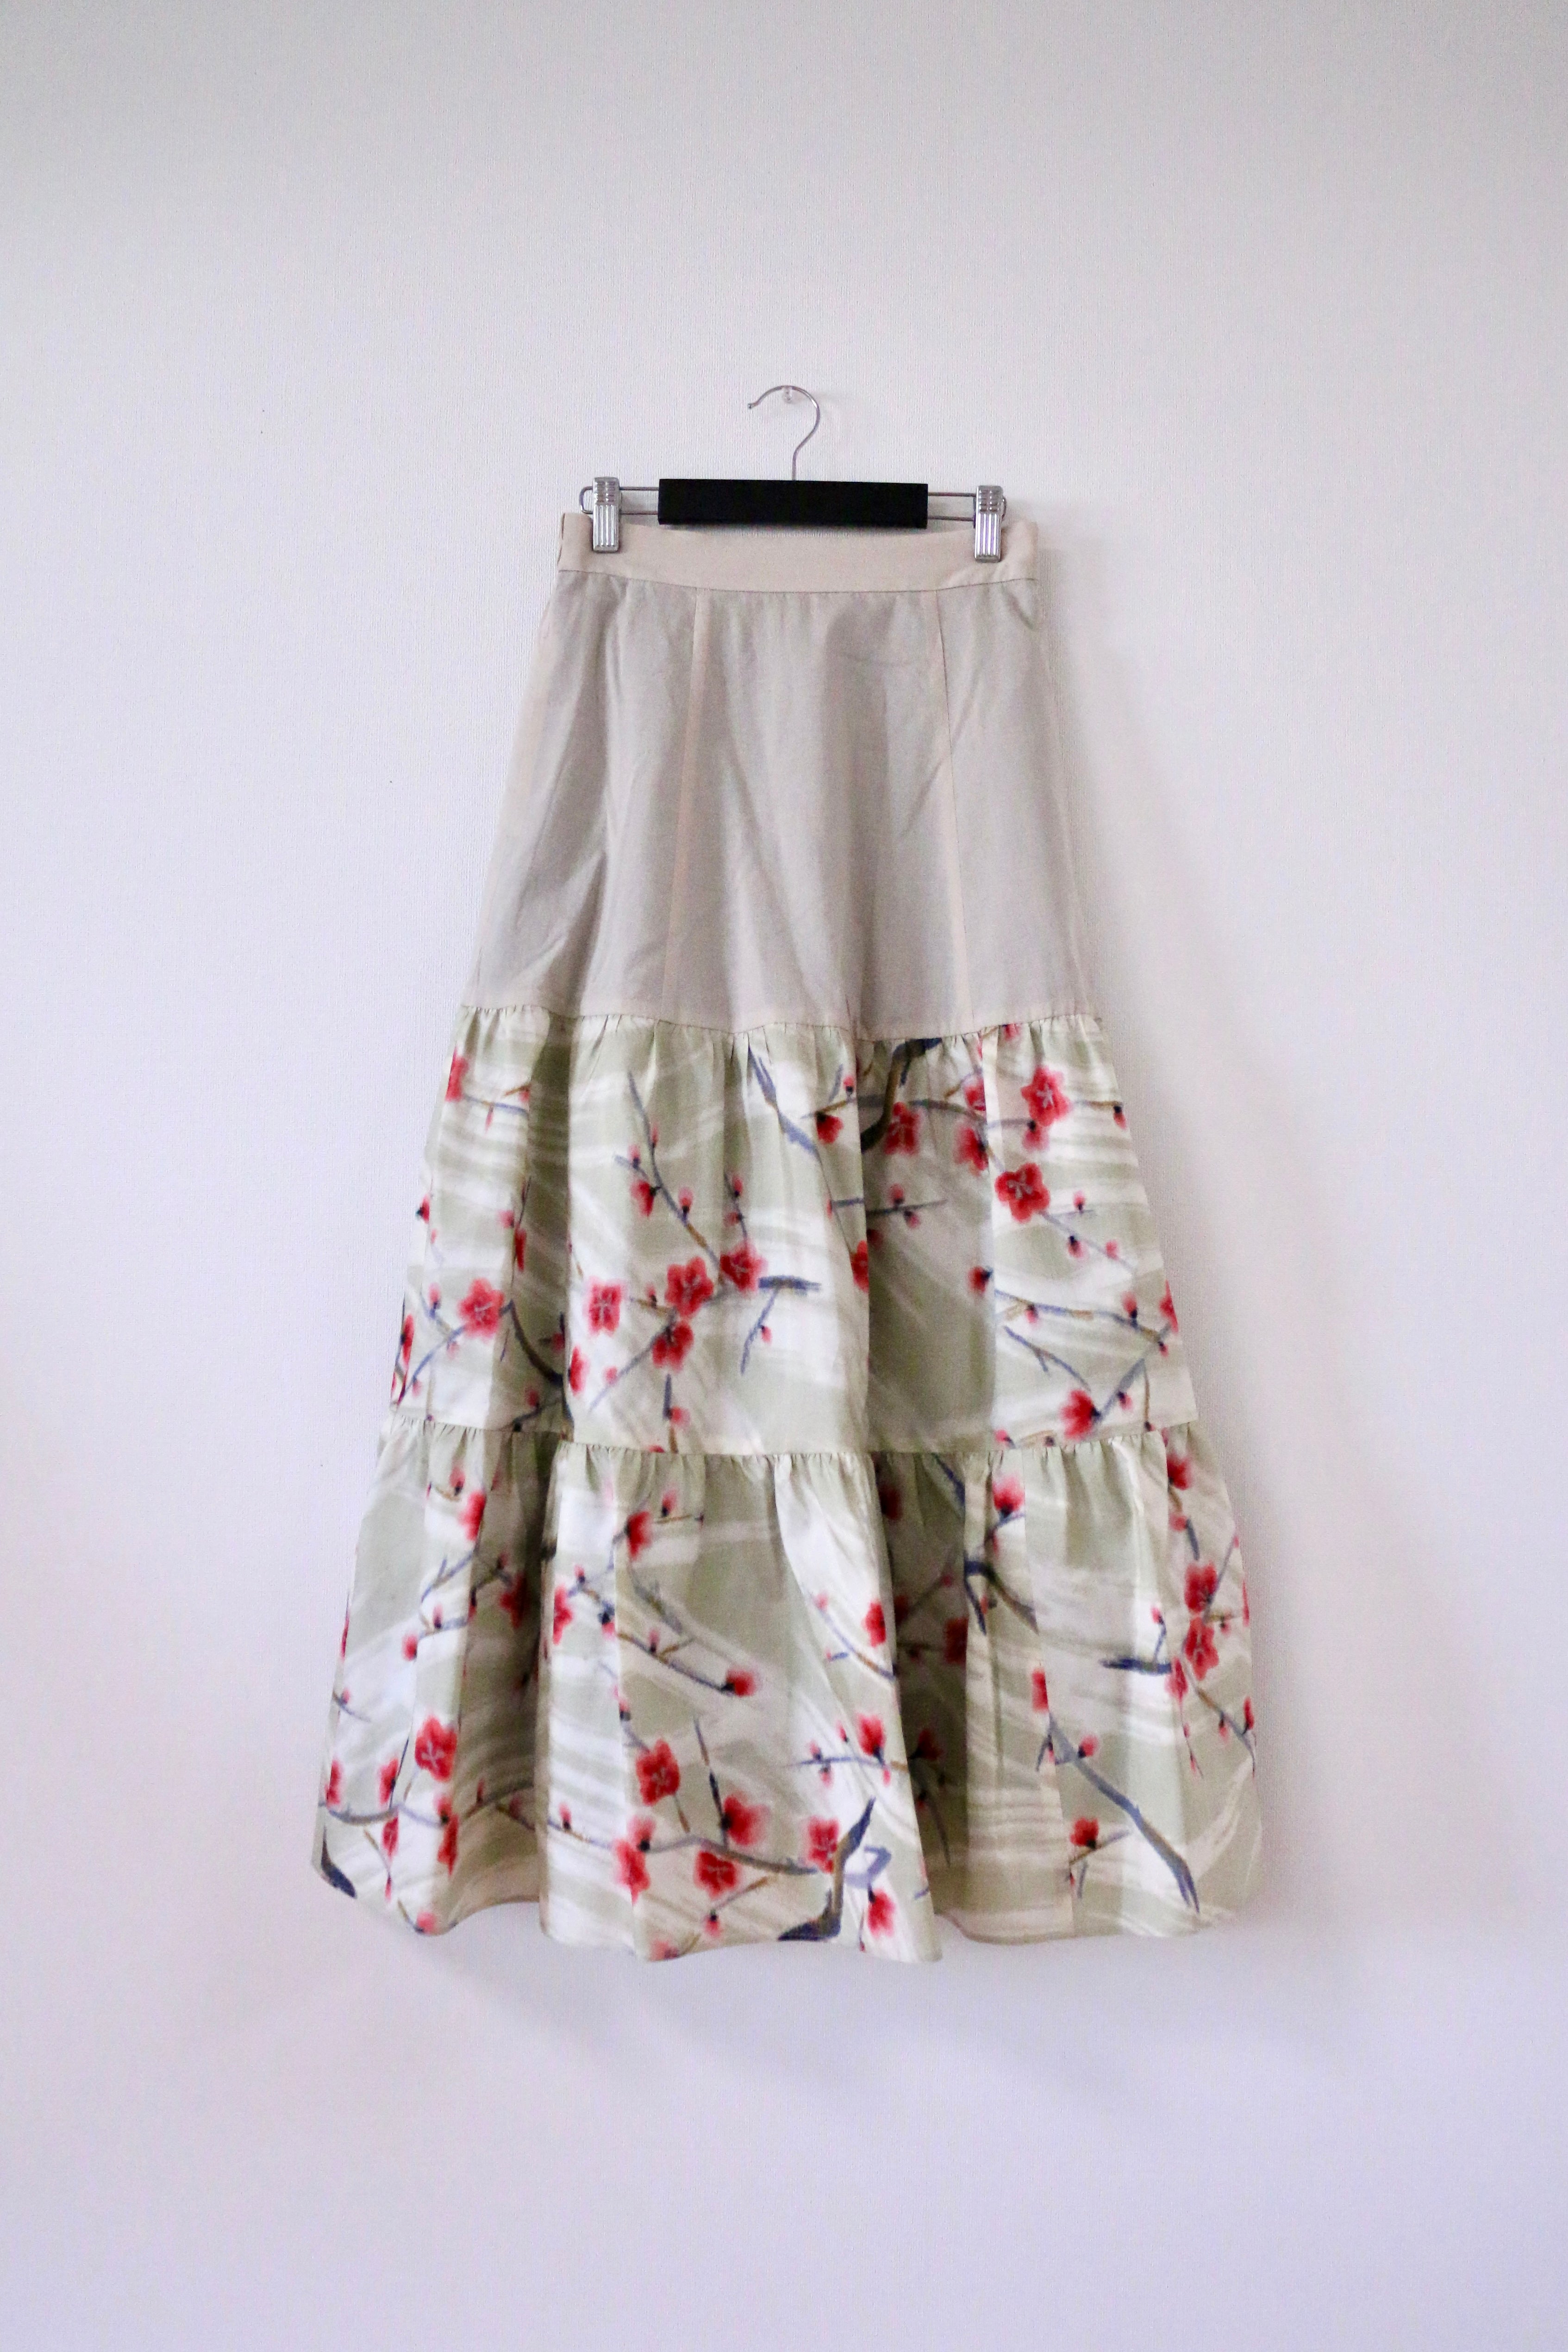 Ume -Meisen Teayard Skirt beige-